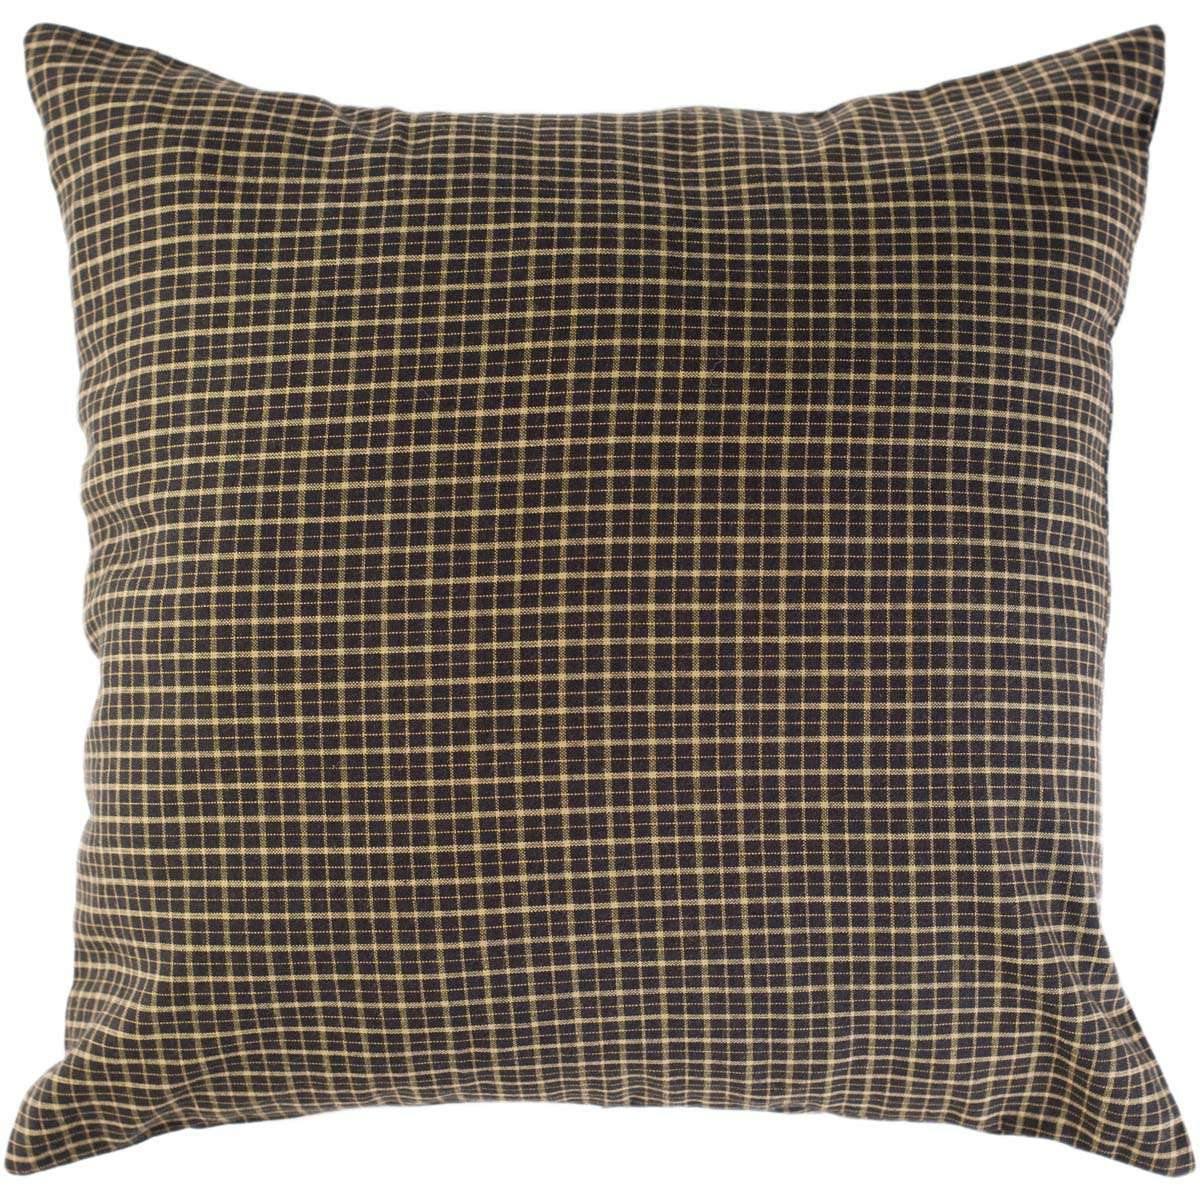 Kettle Grove Pillow Fabric 16x16 - The Fox Decor